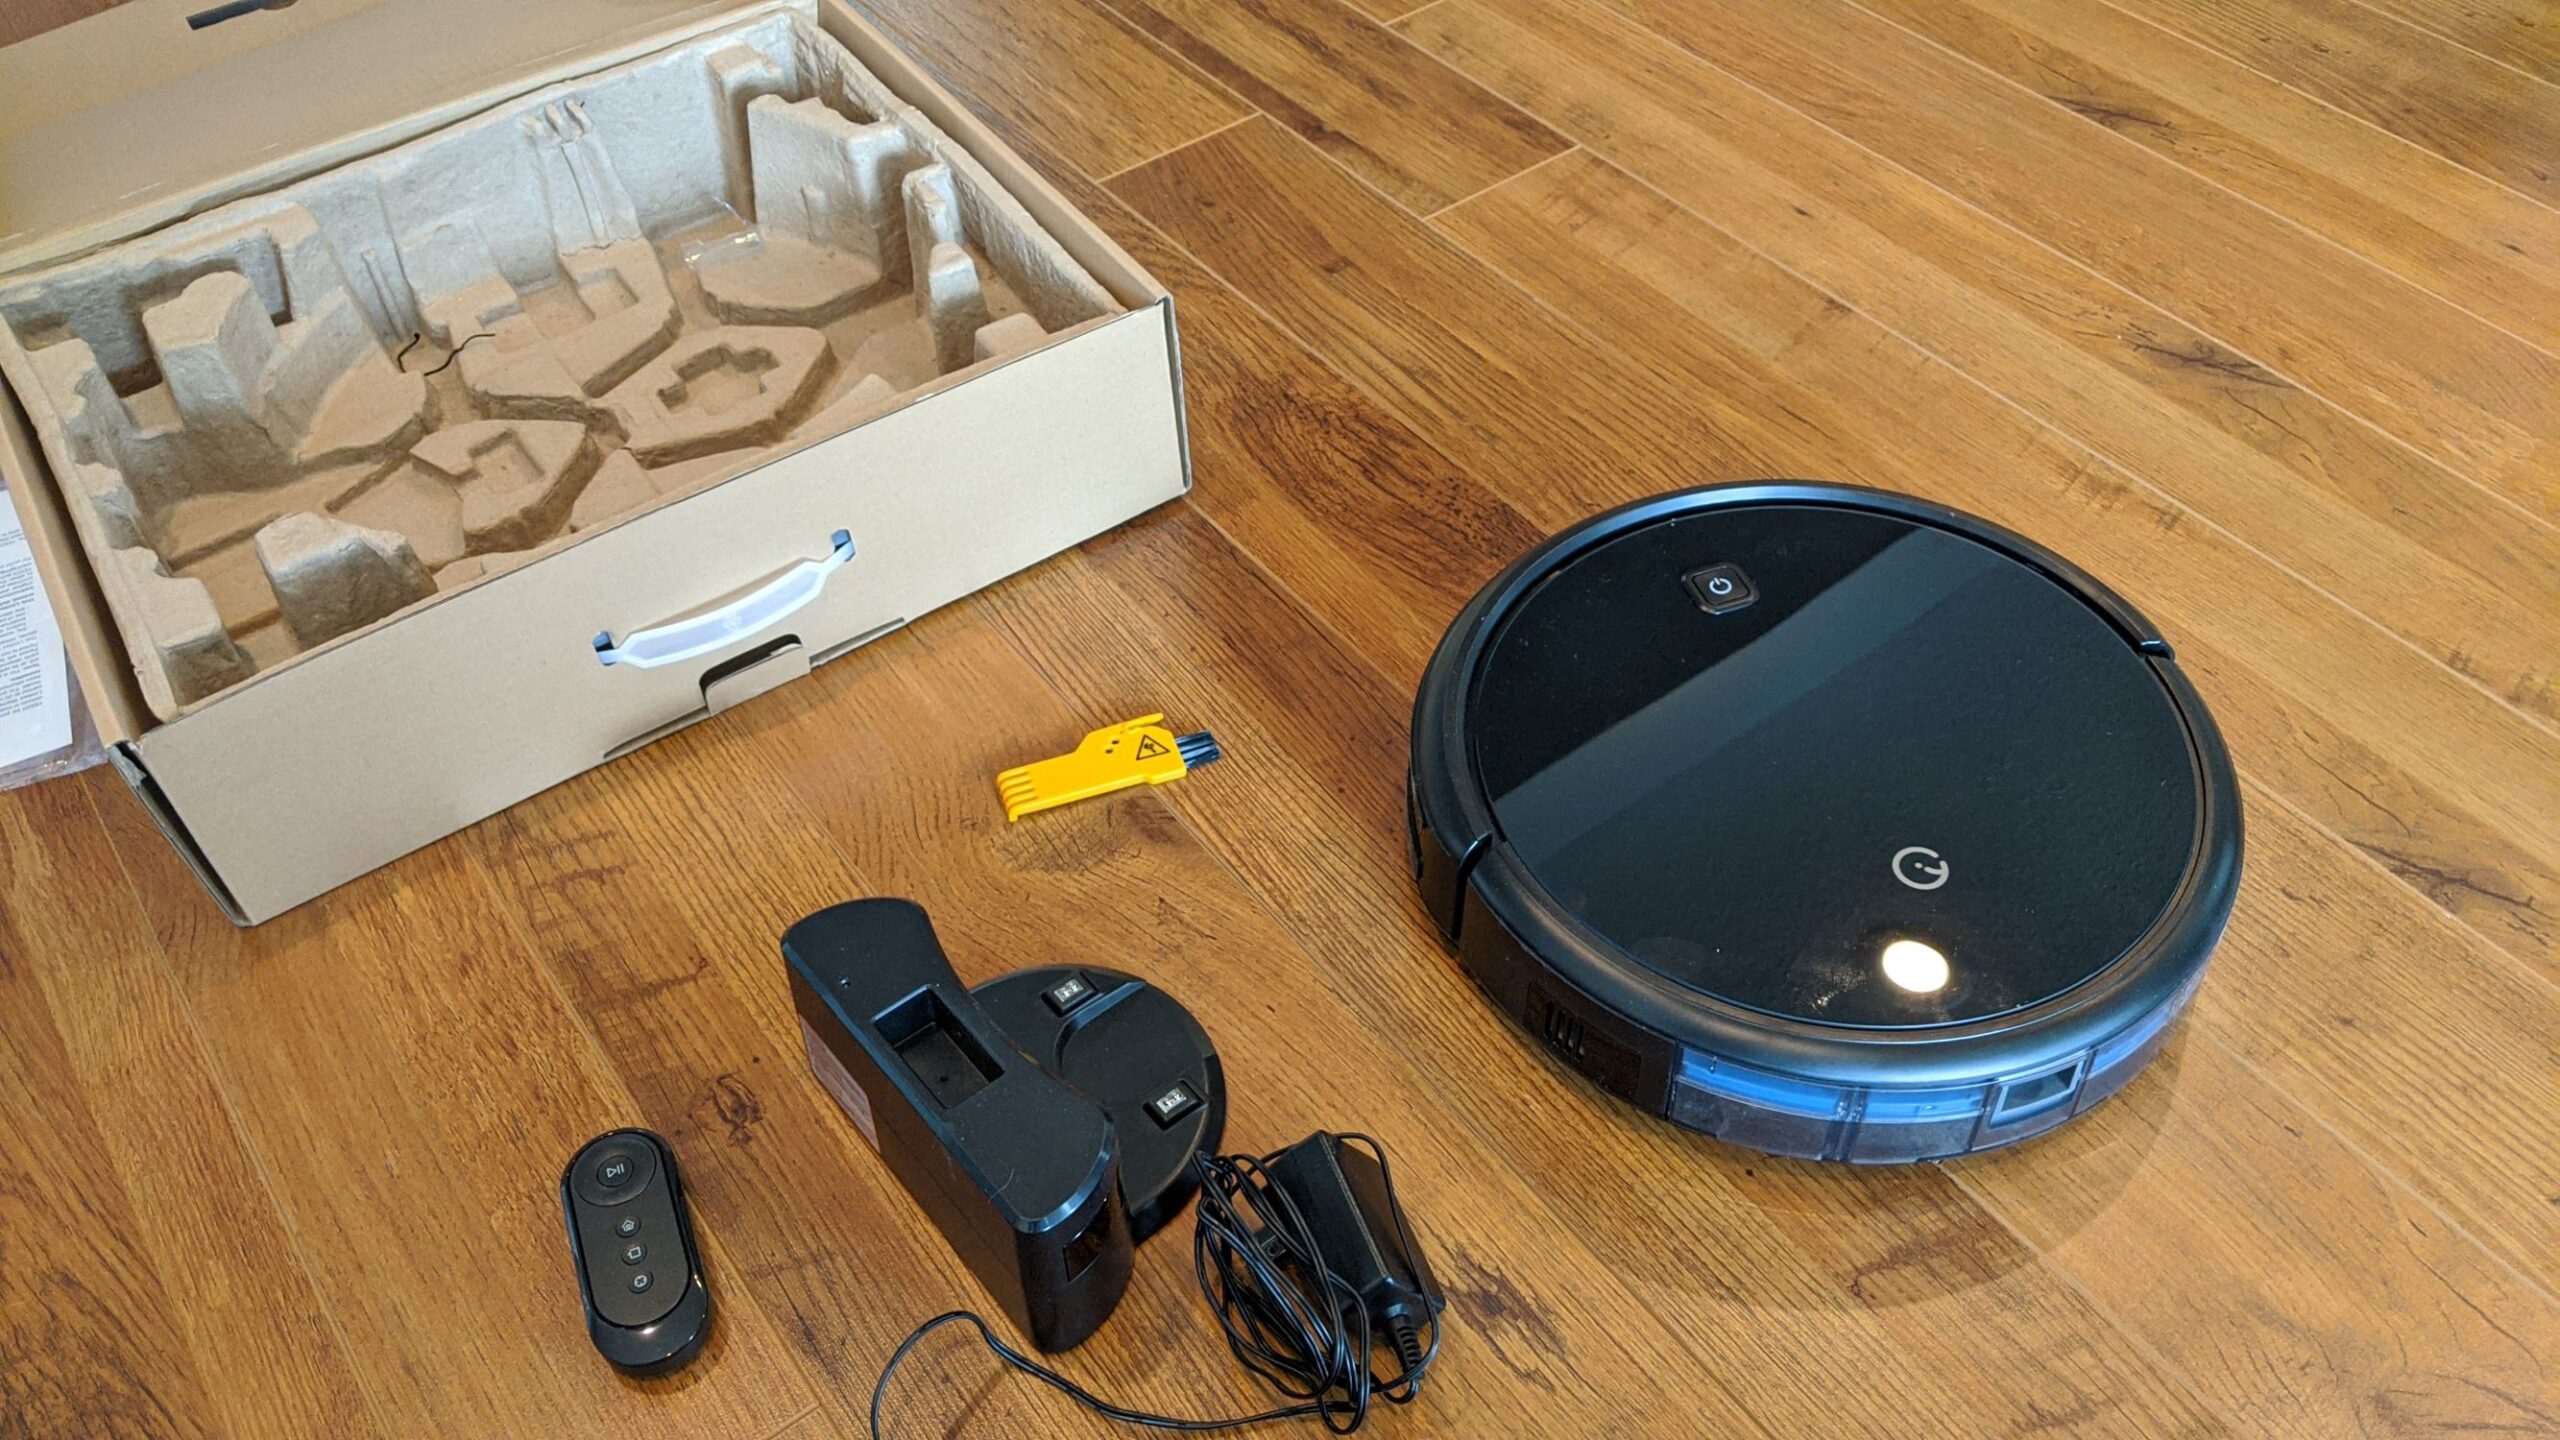 Yeedi K600 Robot Vacuum Cleaner Box Unopened with All Accessories